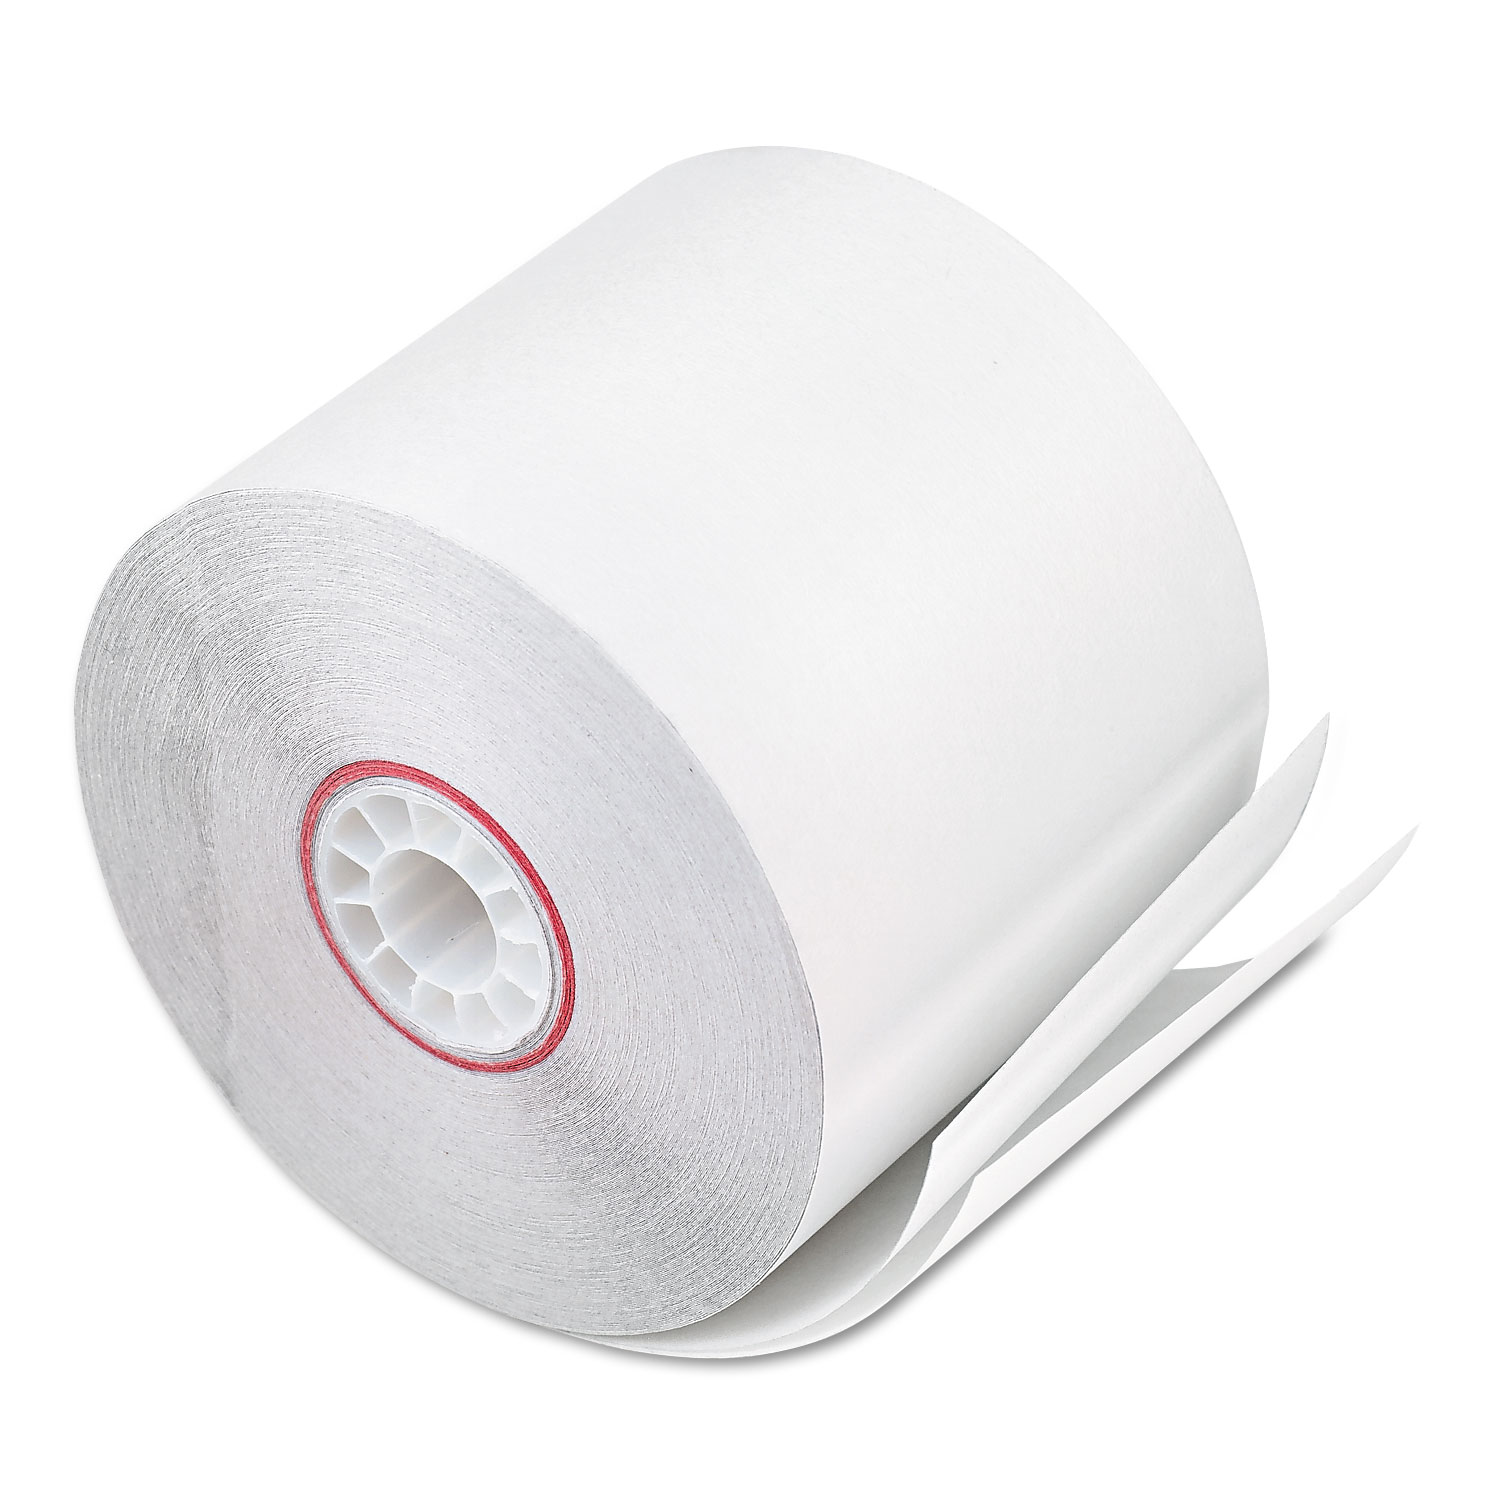  Iconex 8801 Impact Printing Carbonless Paper Rolls, 2.25 x 90 ft, White/White, 50/Carton (ICX90770441) 